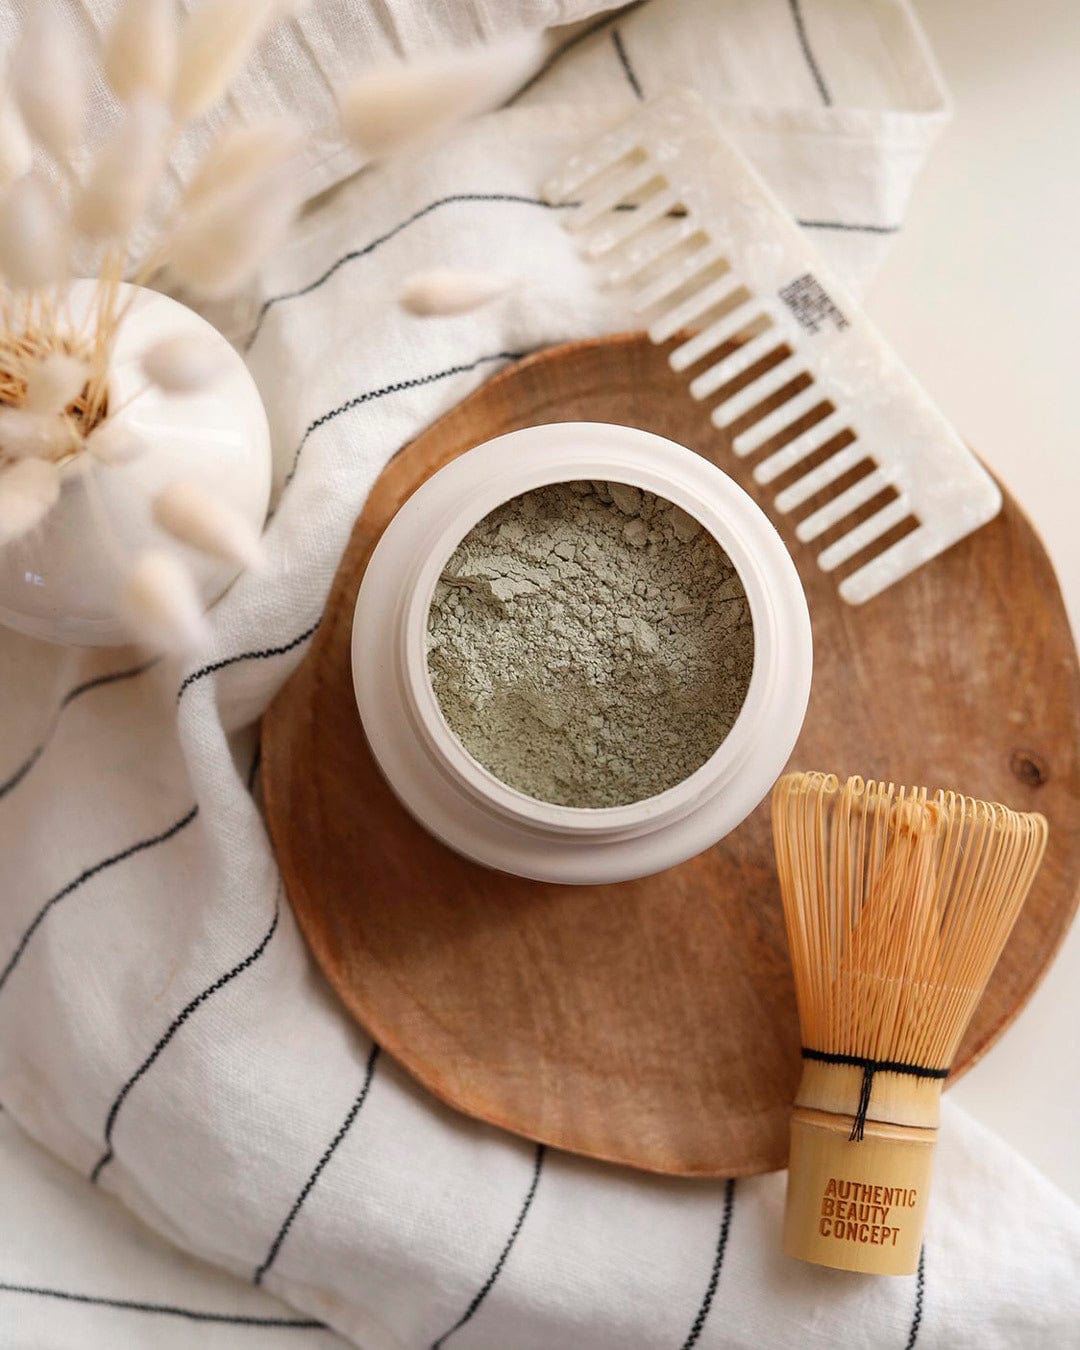 Authentic Beauty Concept Tratamiento Detoxifying Scalp Mud TRT 165g Roberta Beauty Club Tienda Online Productos de Peluqueria